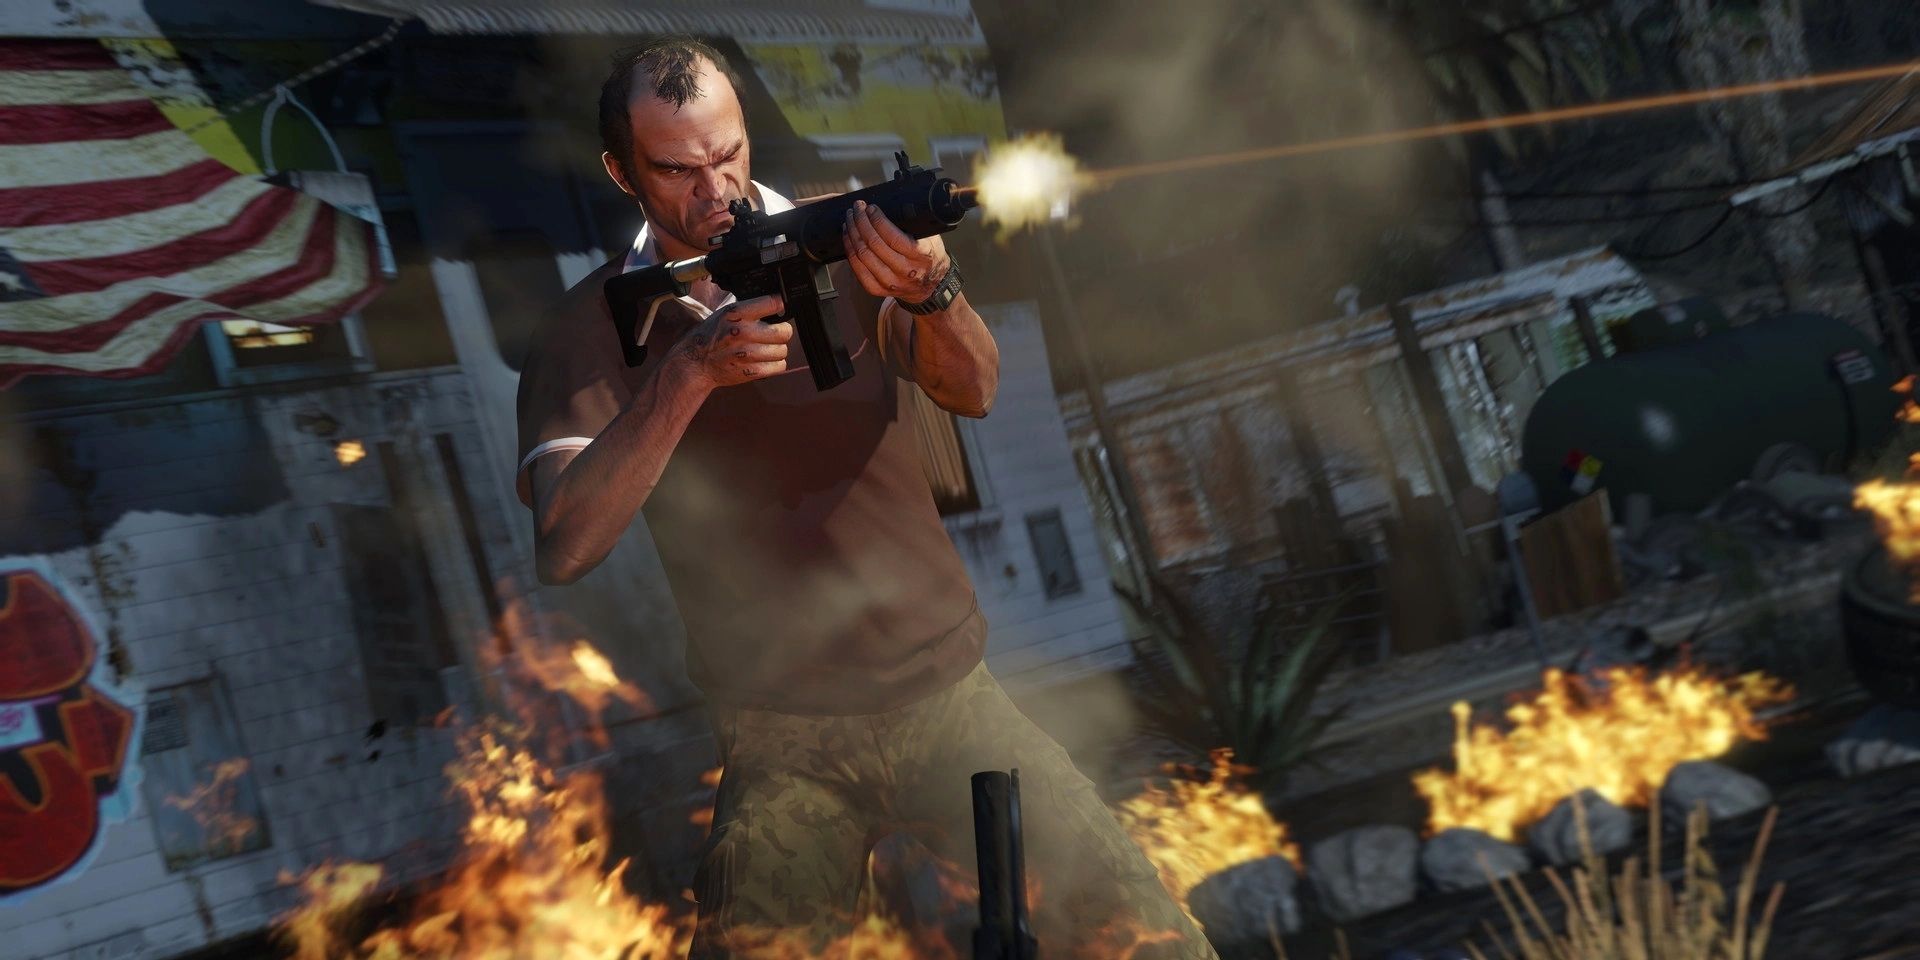 Trevor on a killing spree in Grand Theft Auto V